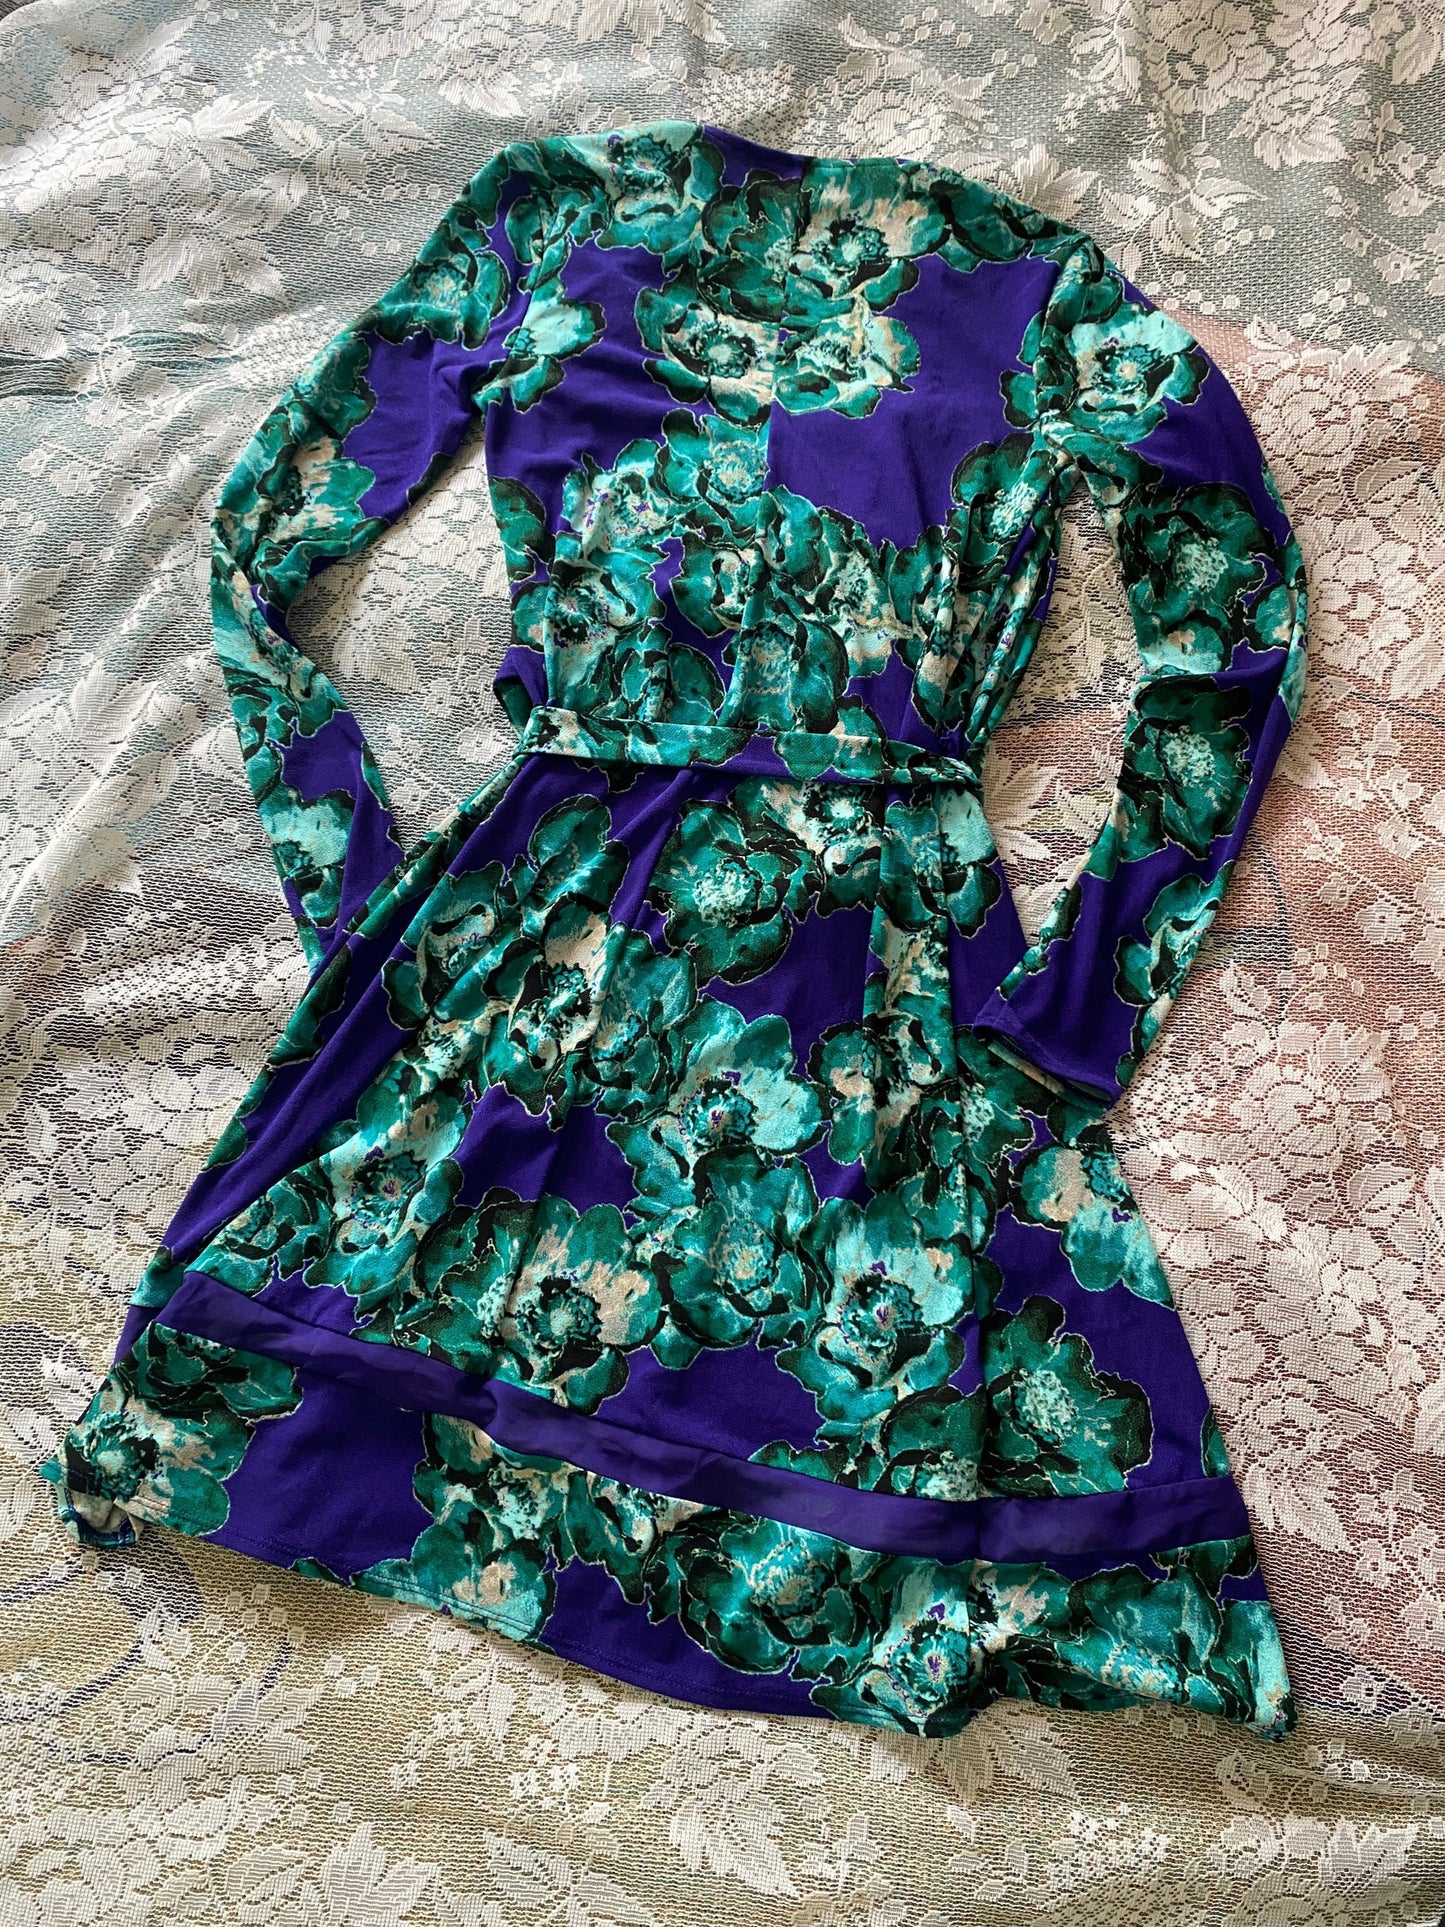 Blue Floral Dress